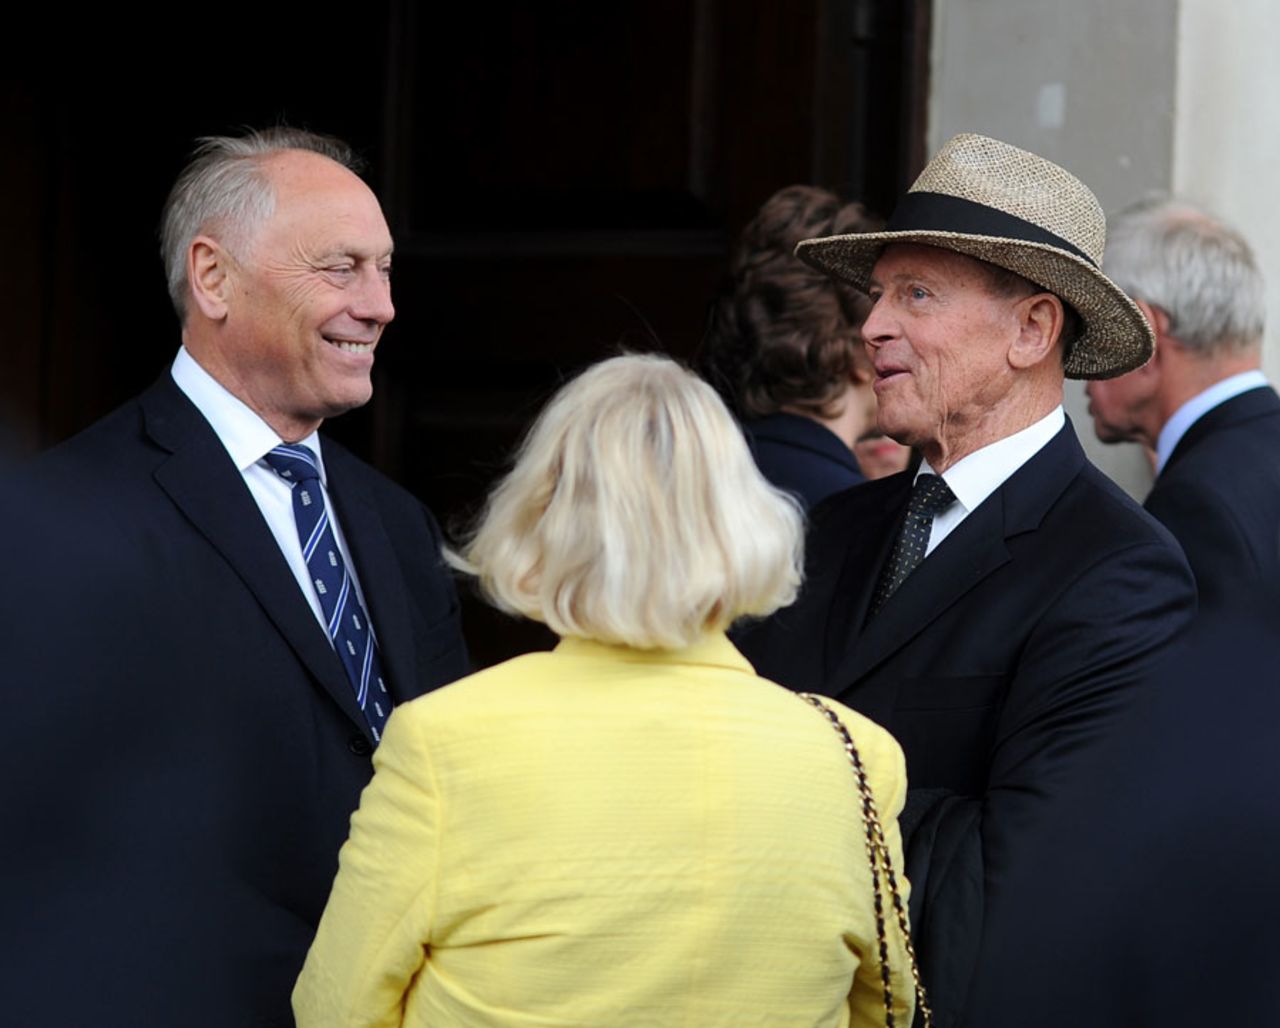 Colin Graves and Geoffrey Boycott attend Tony Greig's memorial service, Trafalgar Square, London, June 24, 2013